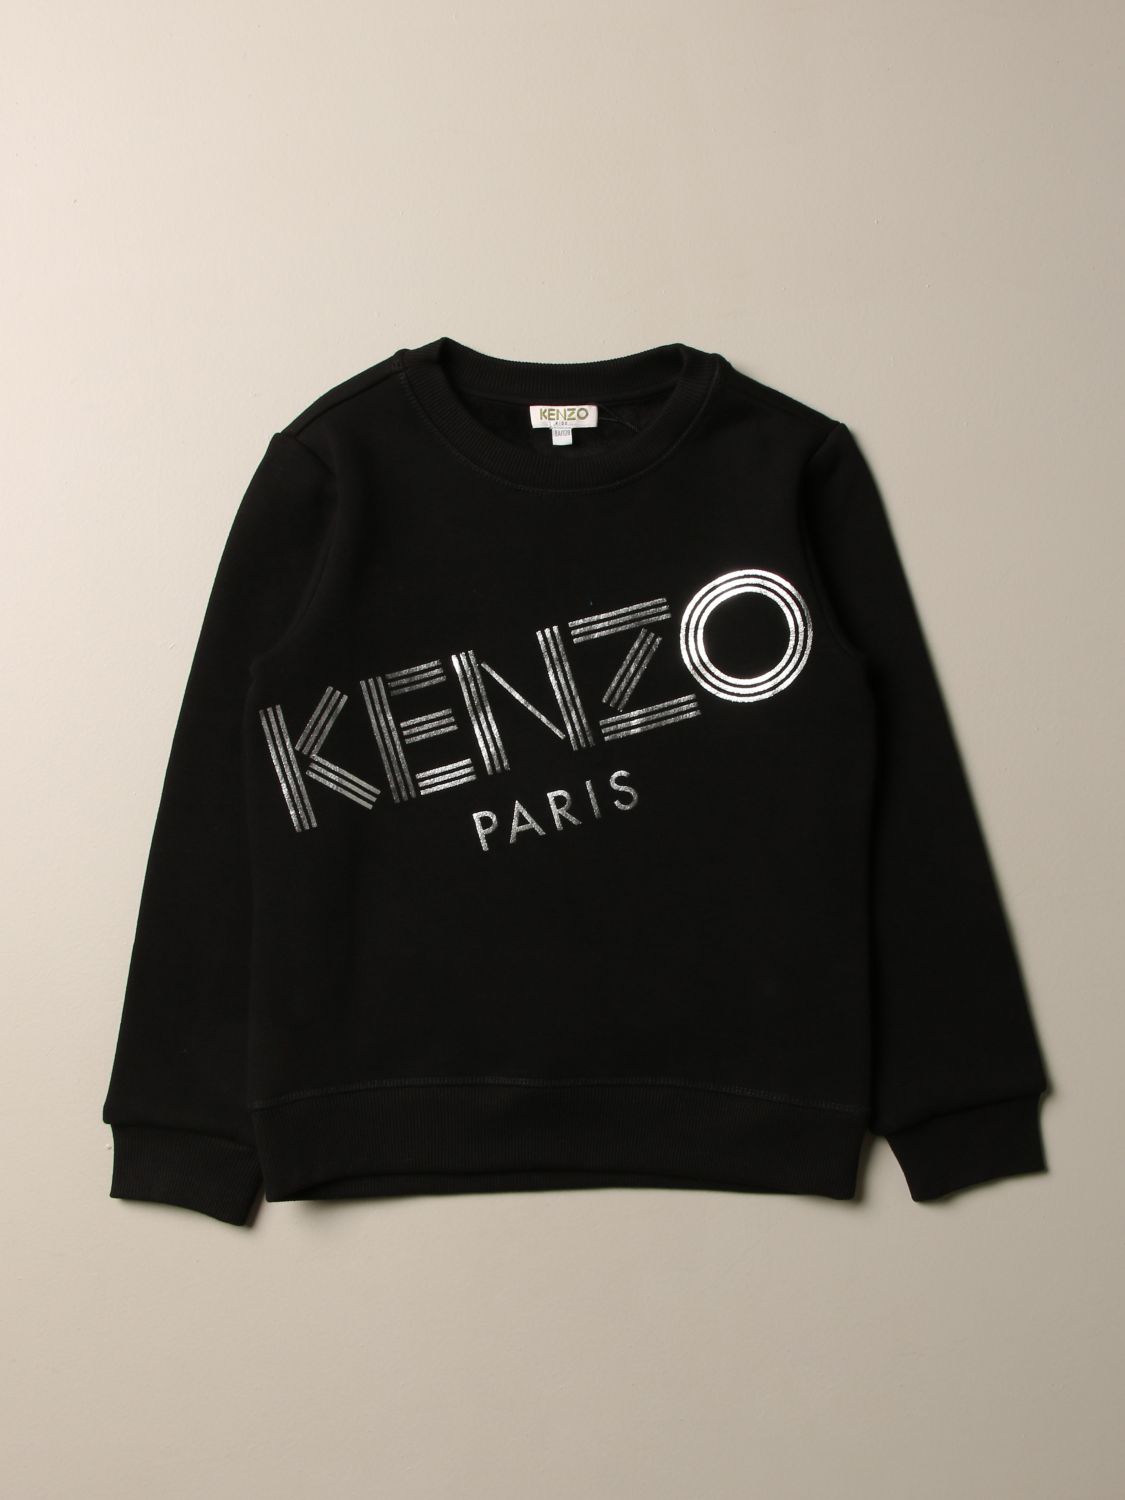 kenzo jumper price